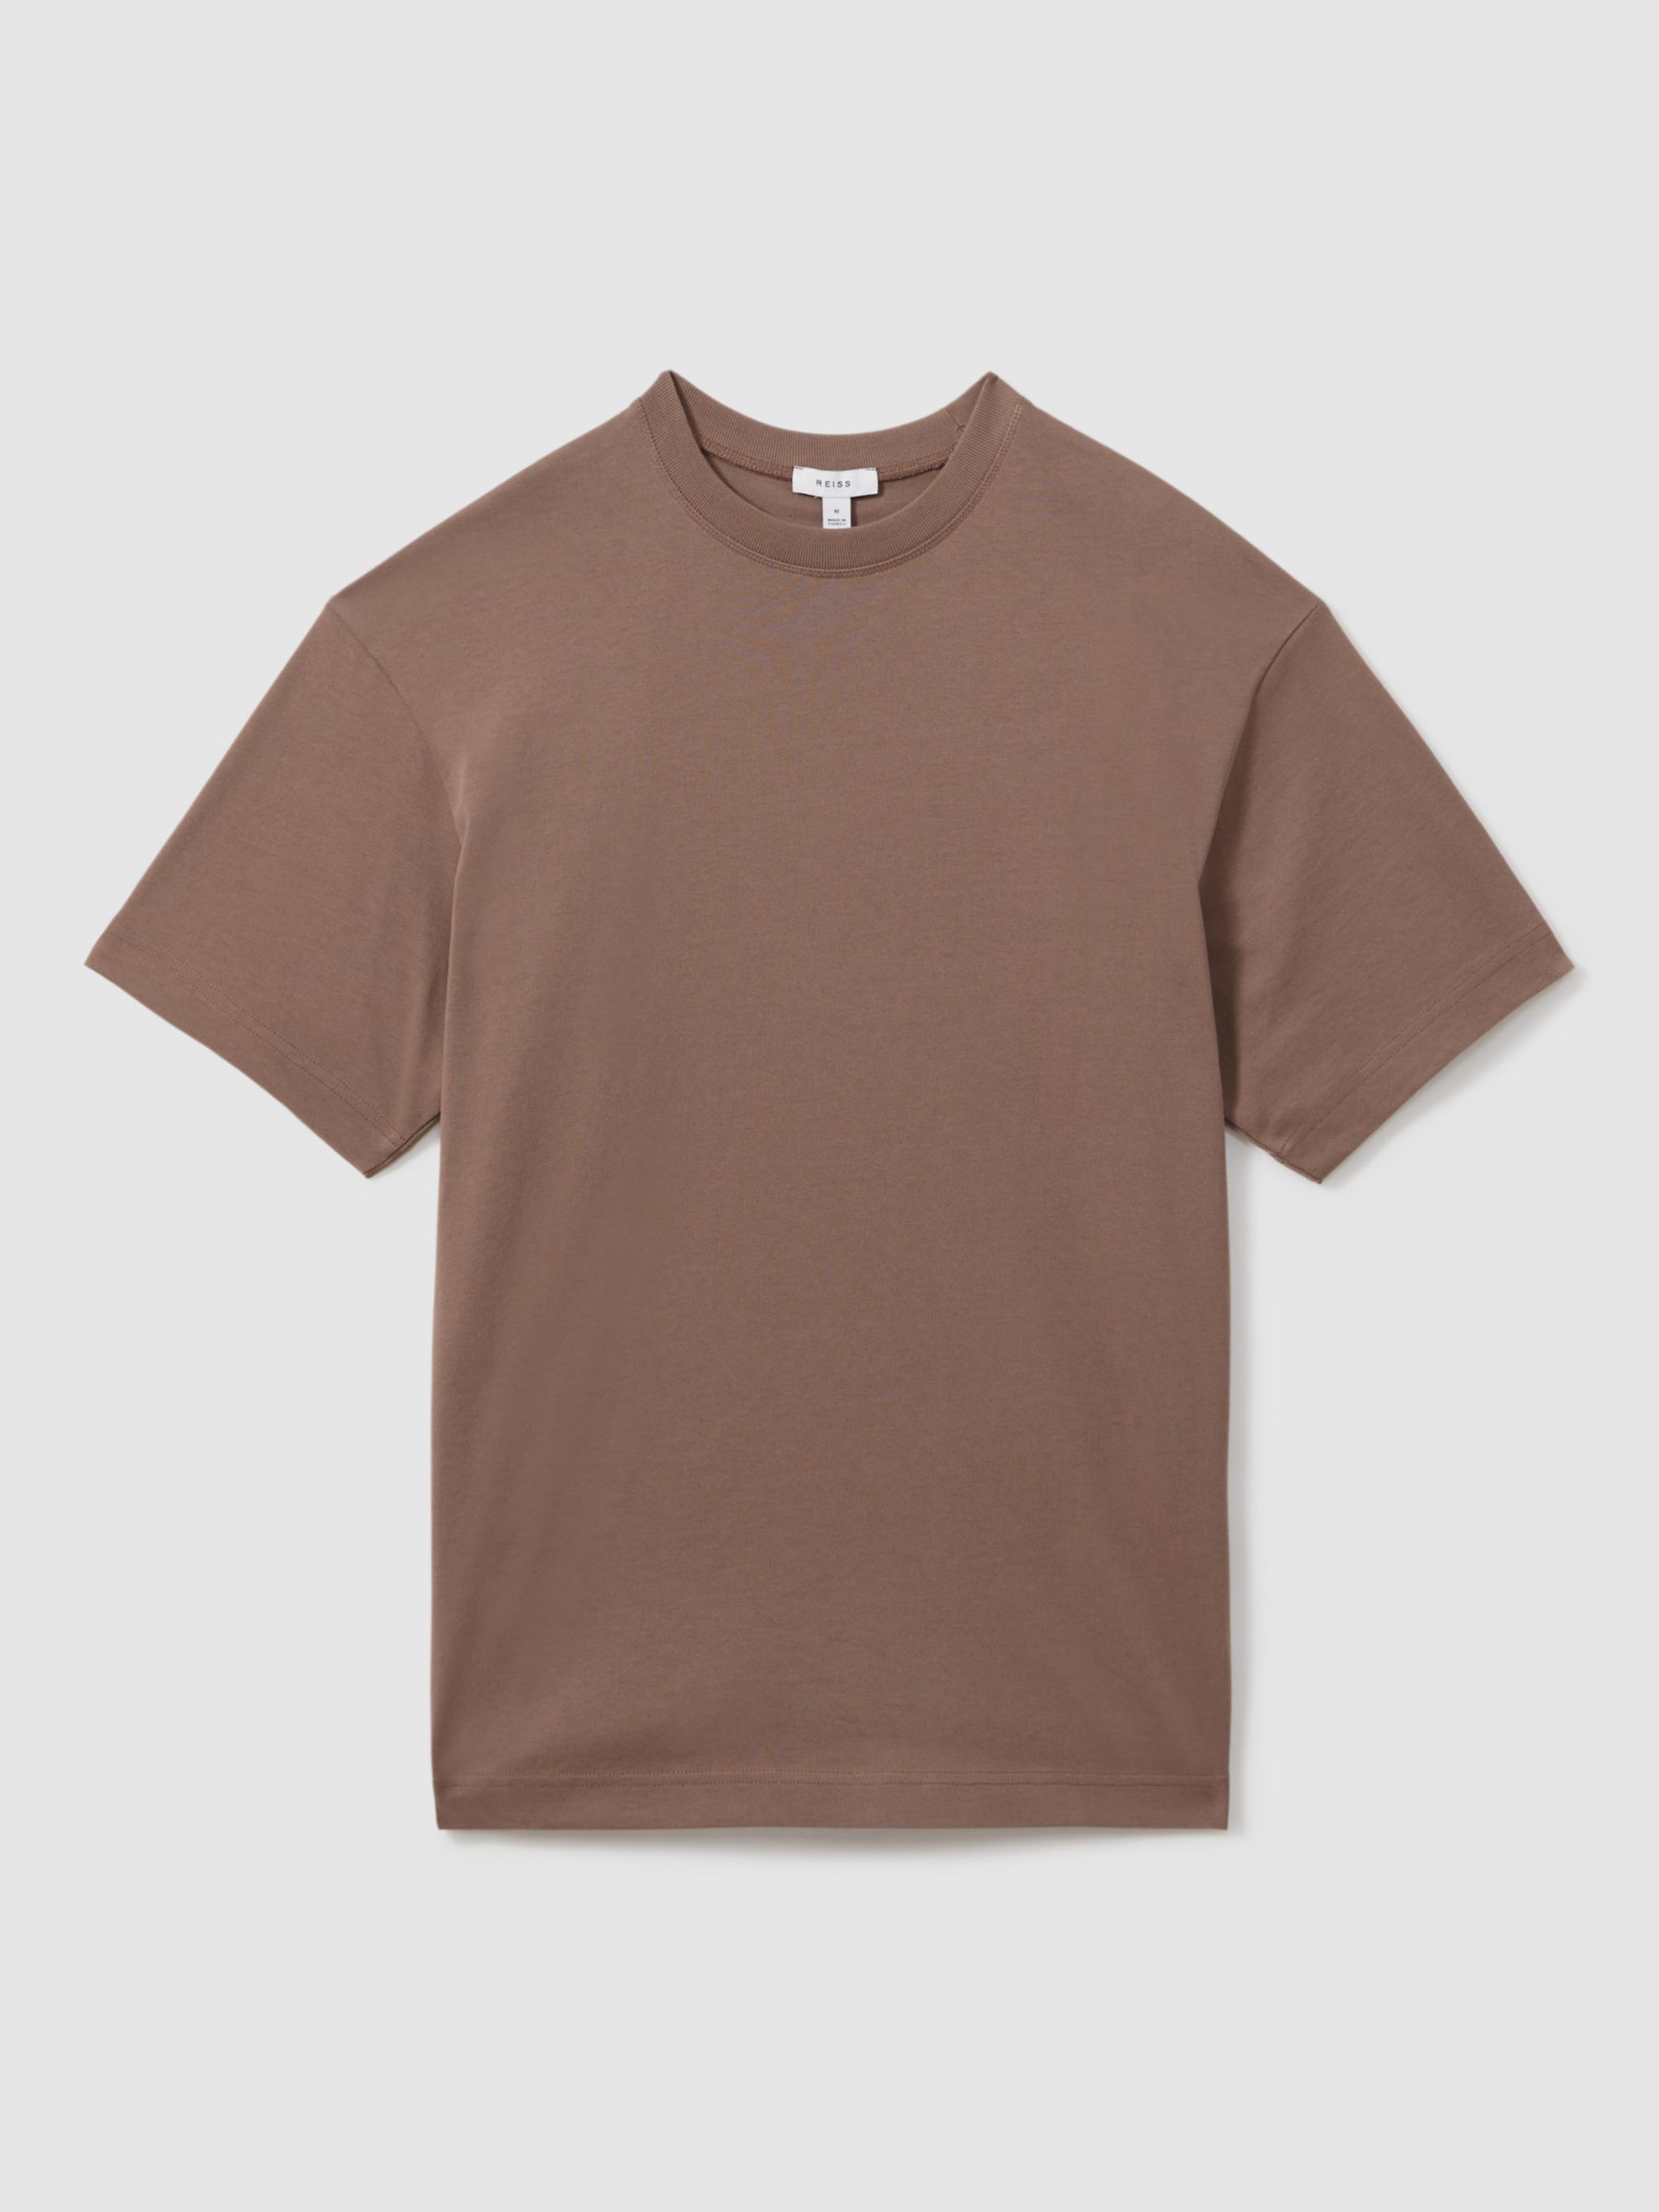 Reiss Tate Oversized T-Shirt, Deep Taupe, XS